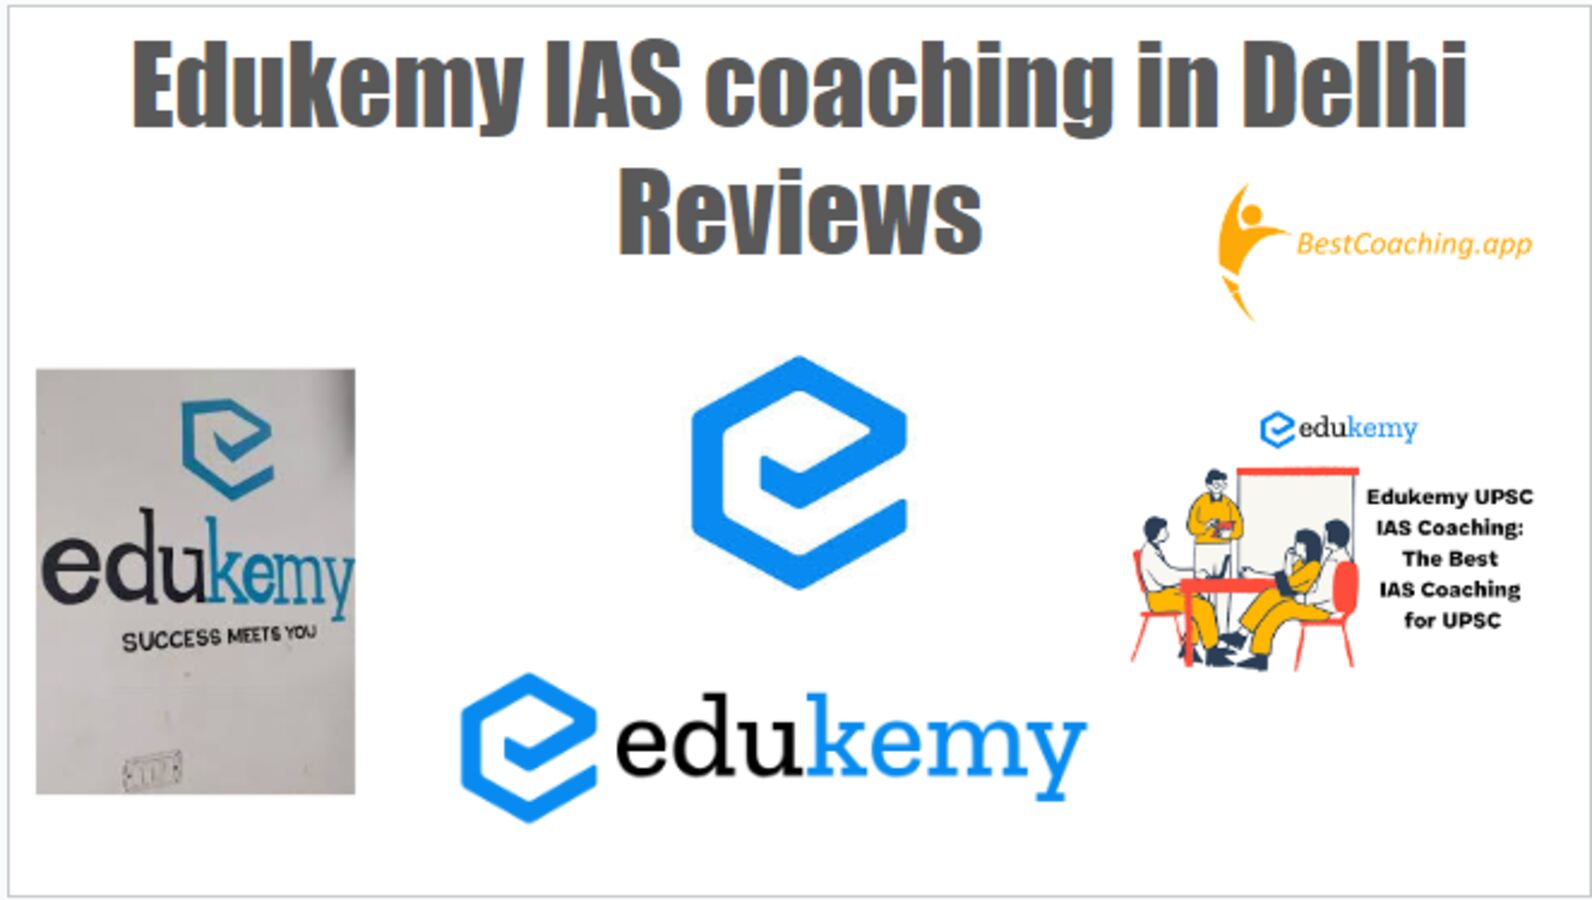 Edukemy IAS coaching in Delhi Reviews